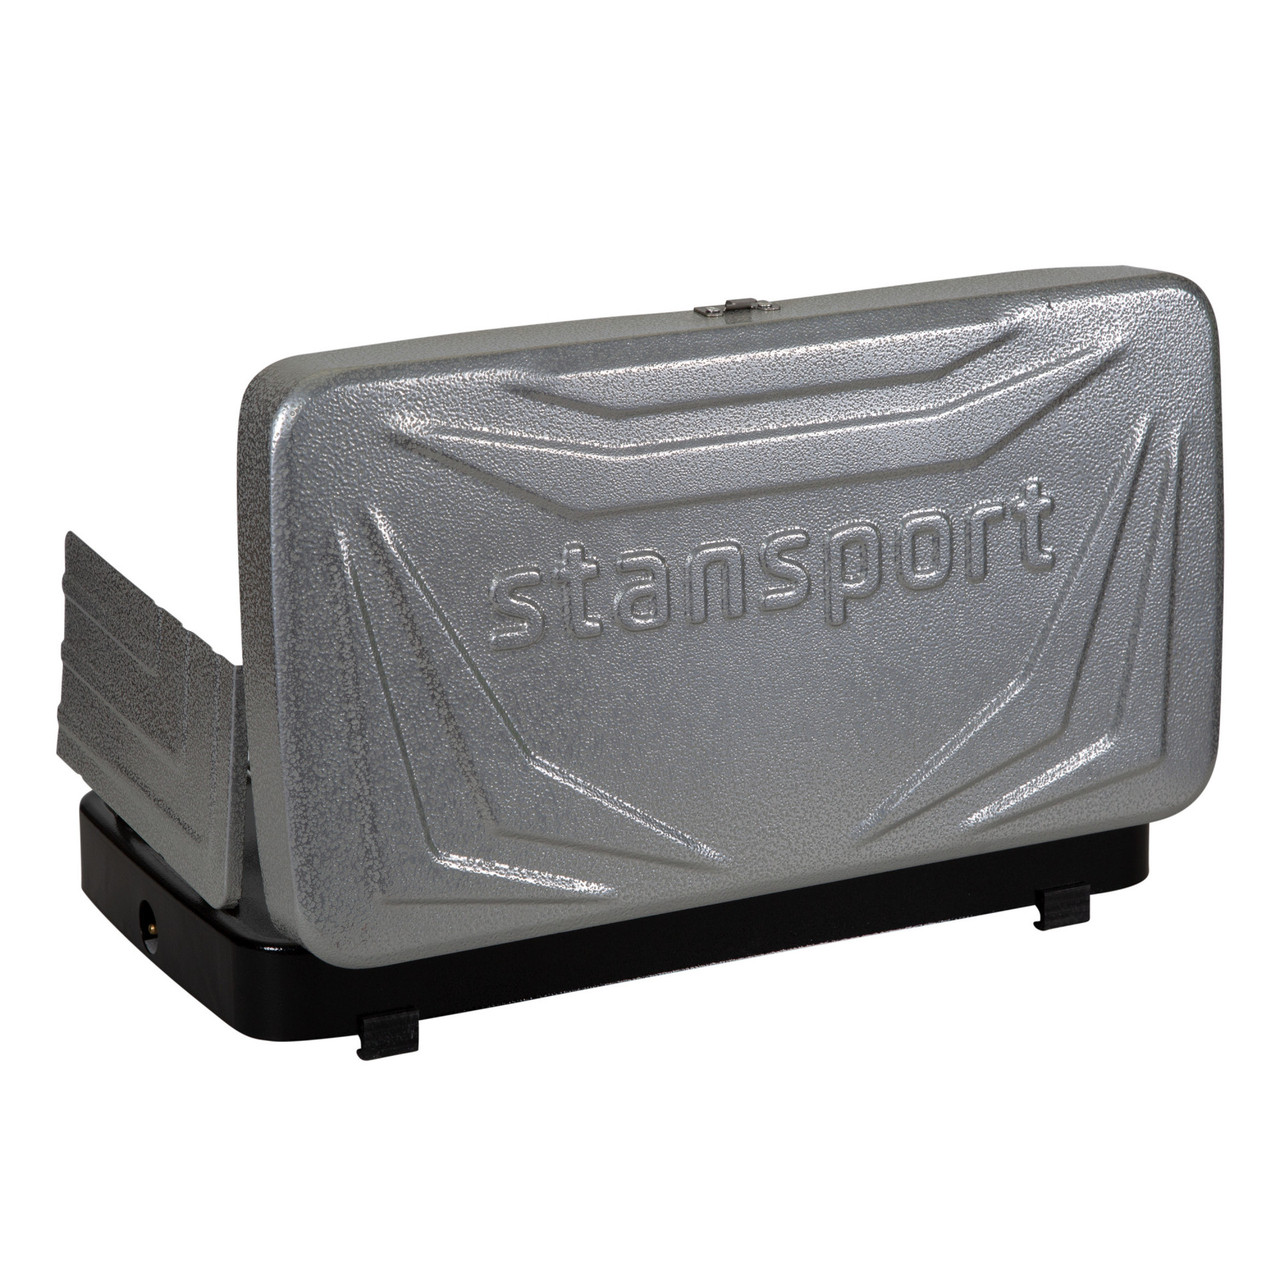 Stansport 2-Burner Regulated Propane Stove Silver